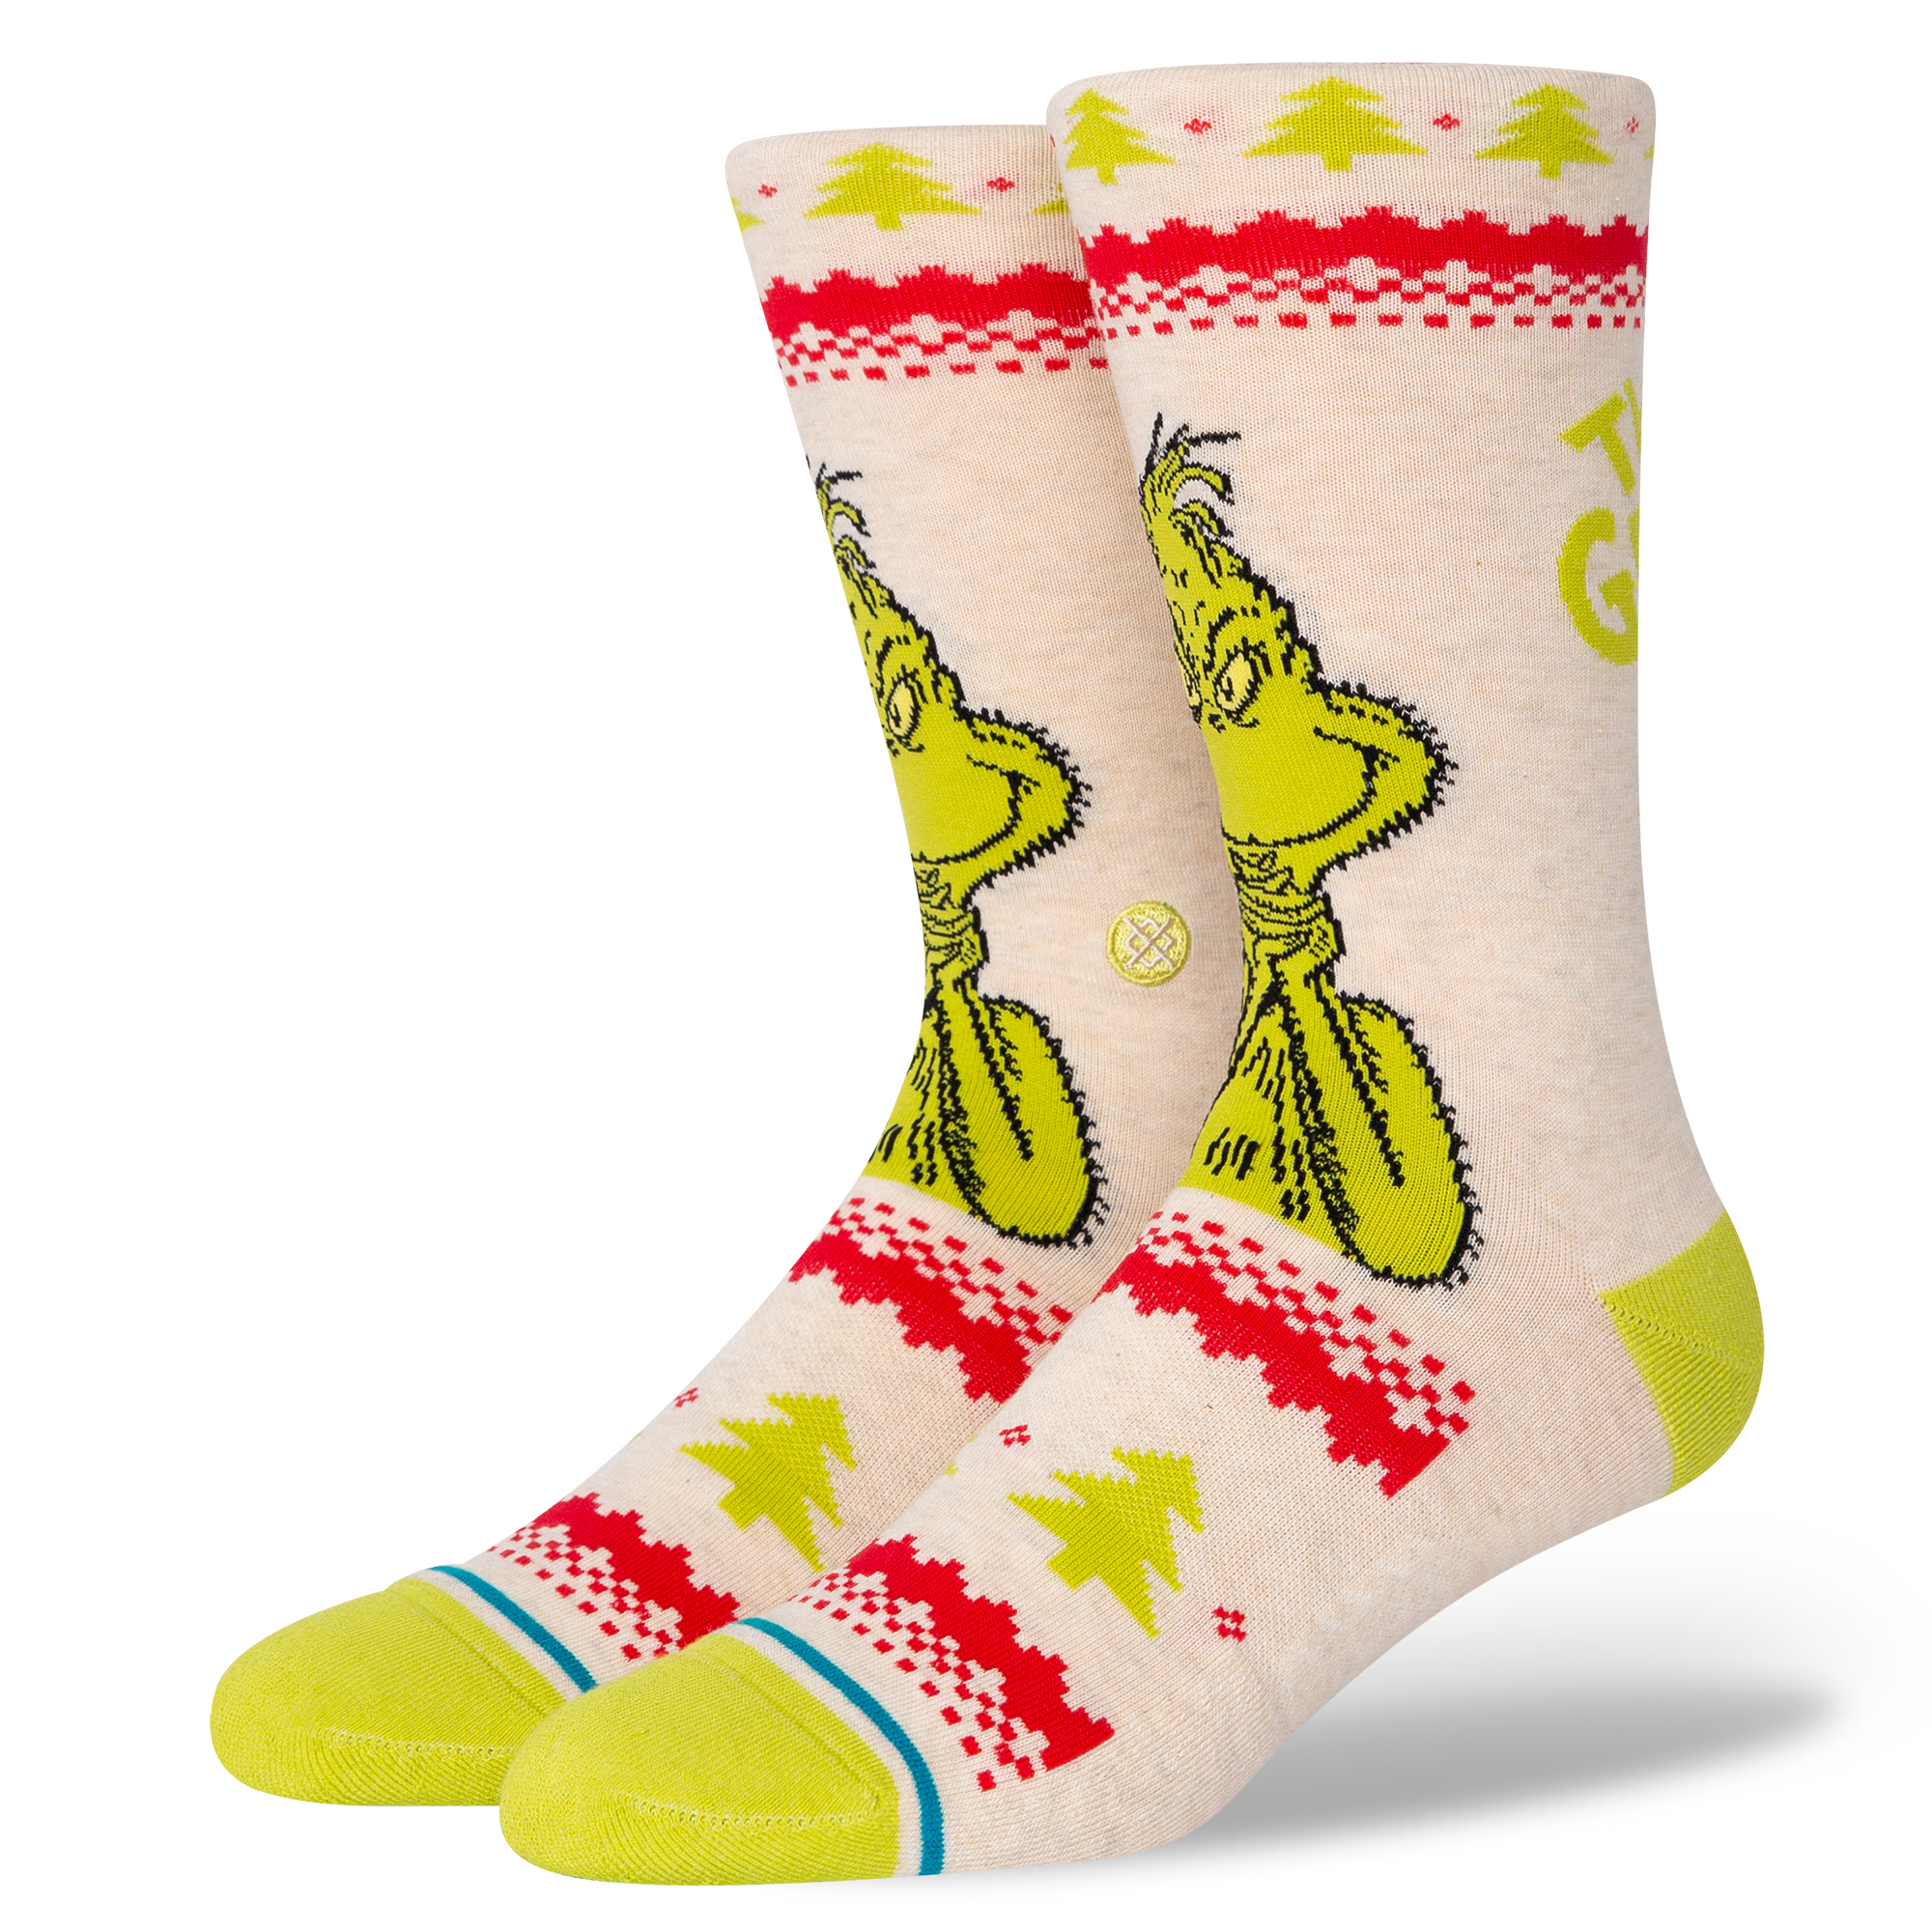 Men's Medium Stance Socks & Large 9-12 6-8.5 The Grinch 